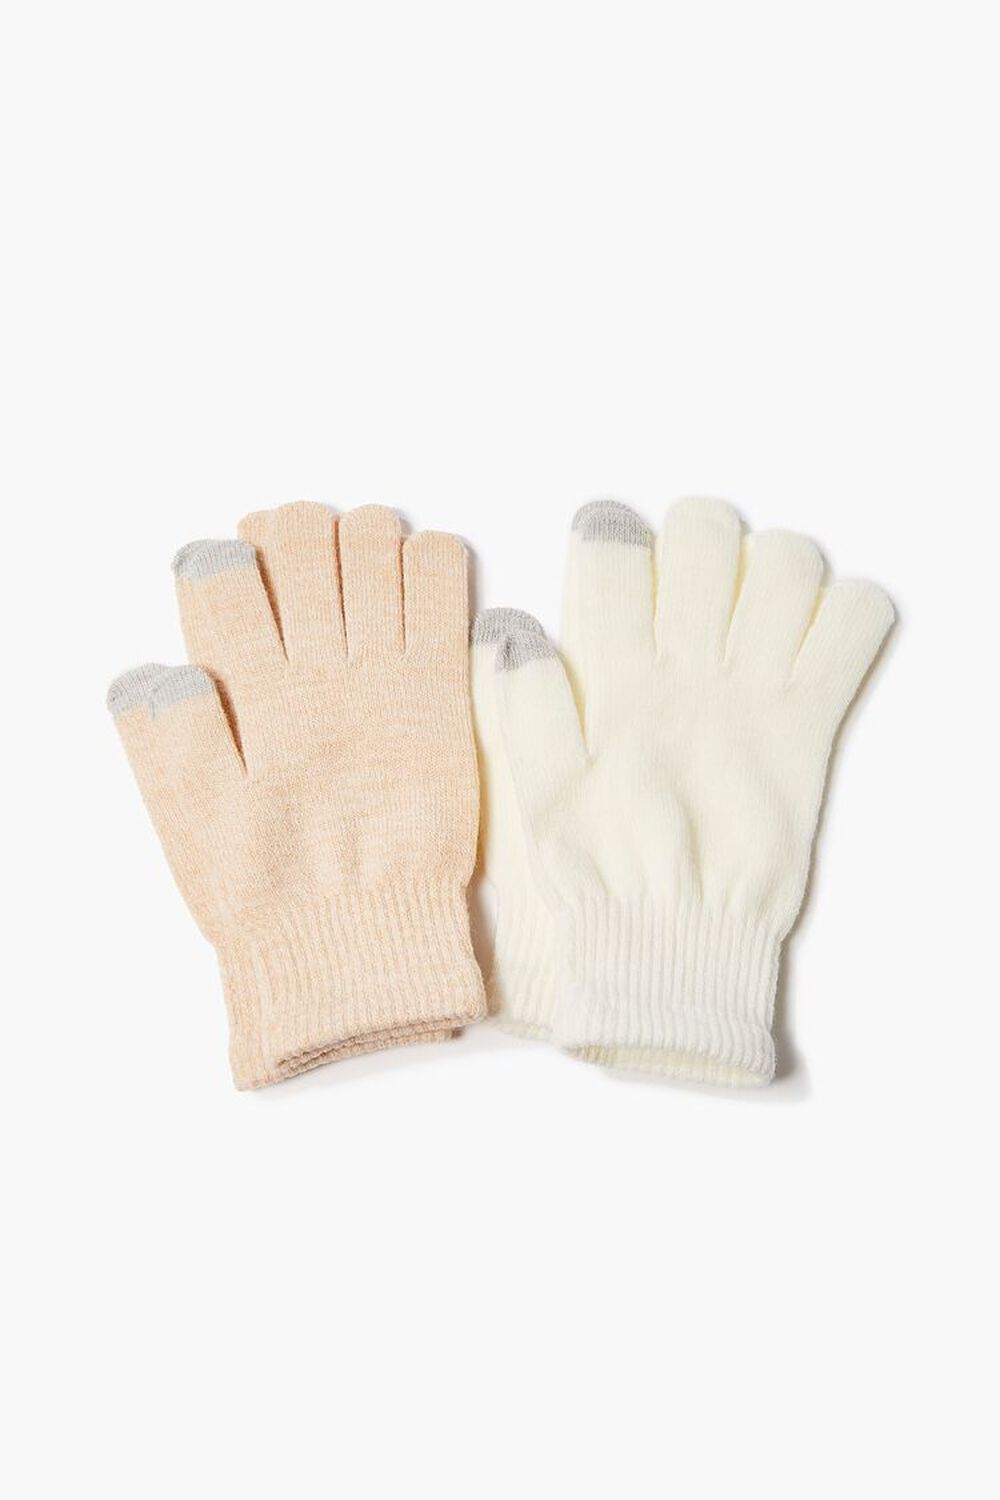 OATMEAL/CREAM Touchscreen Glove Set, image 1